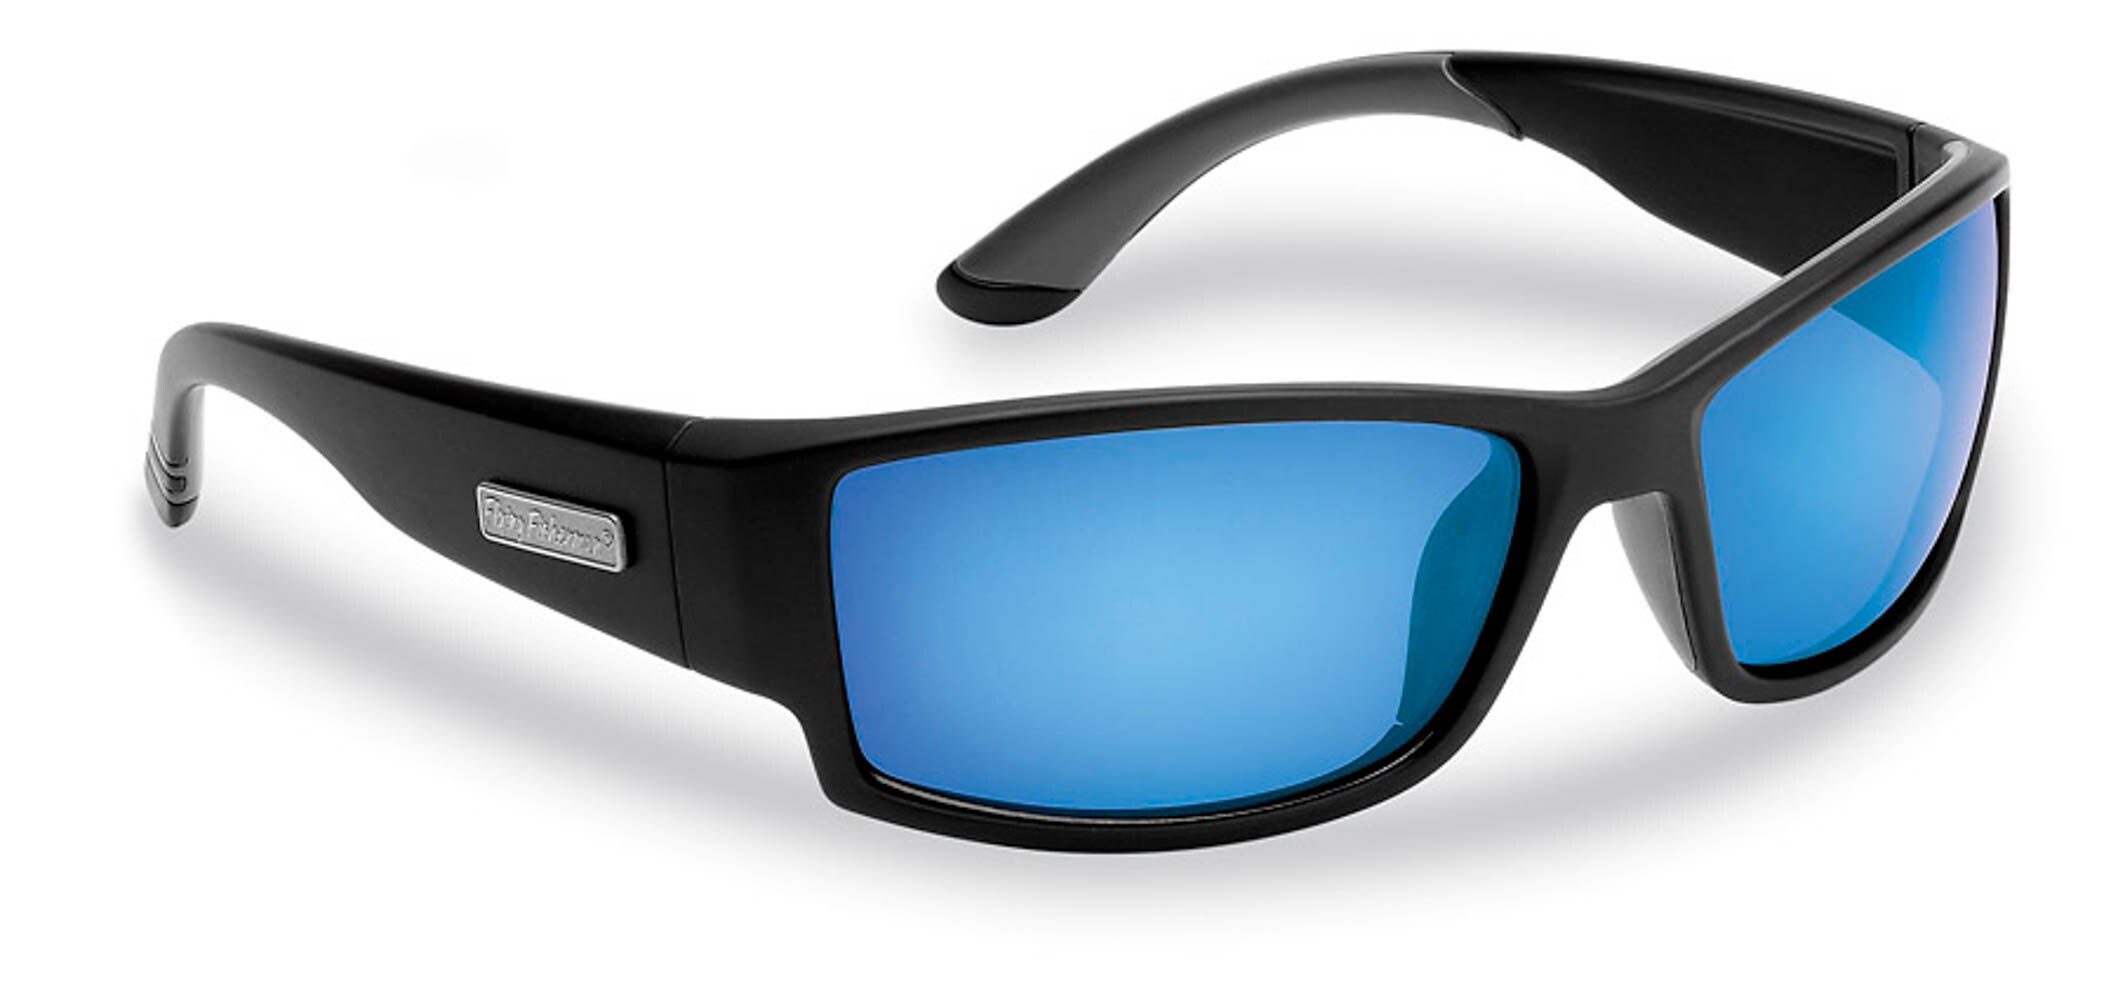 Flying Fisherman 7717BSB Razor Matte Black Blue Mirror Sunglasses